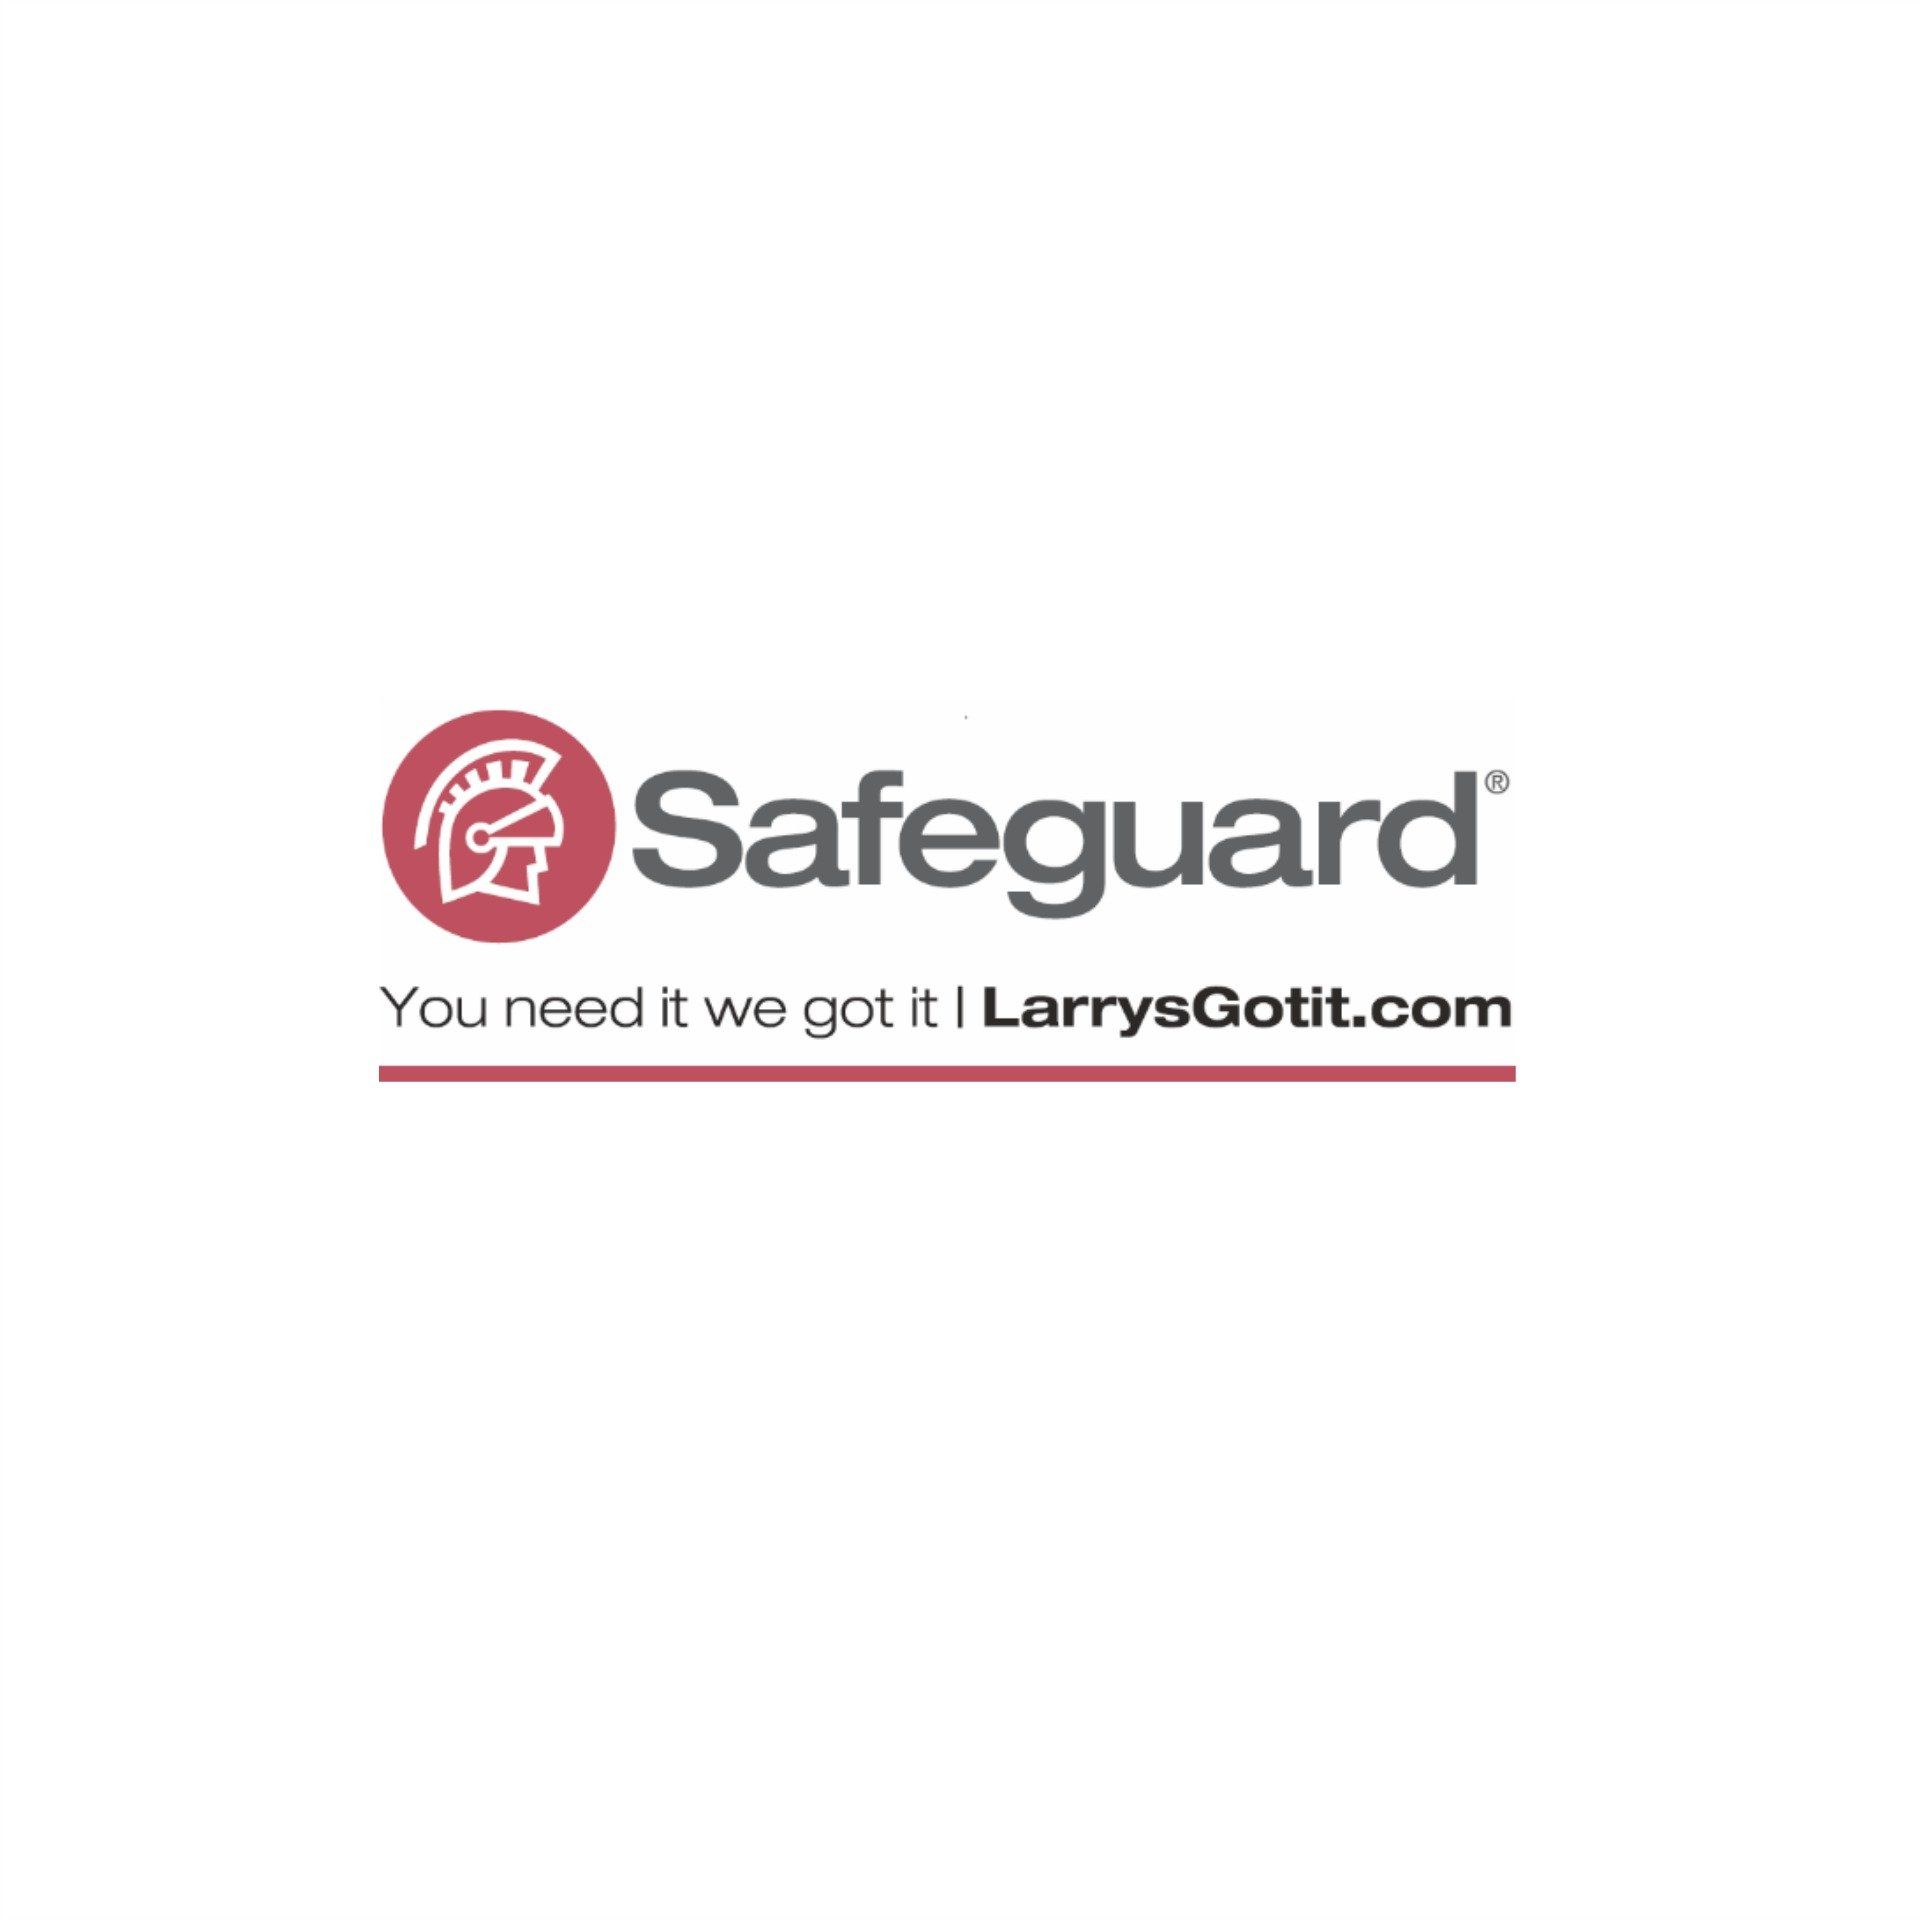 Safeguard Marketing